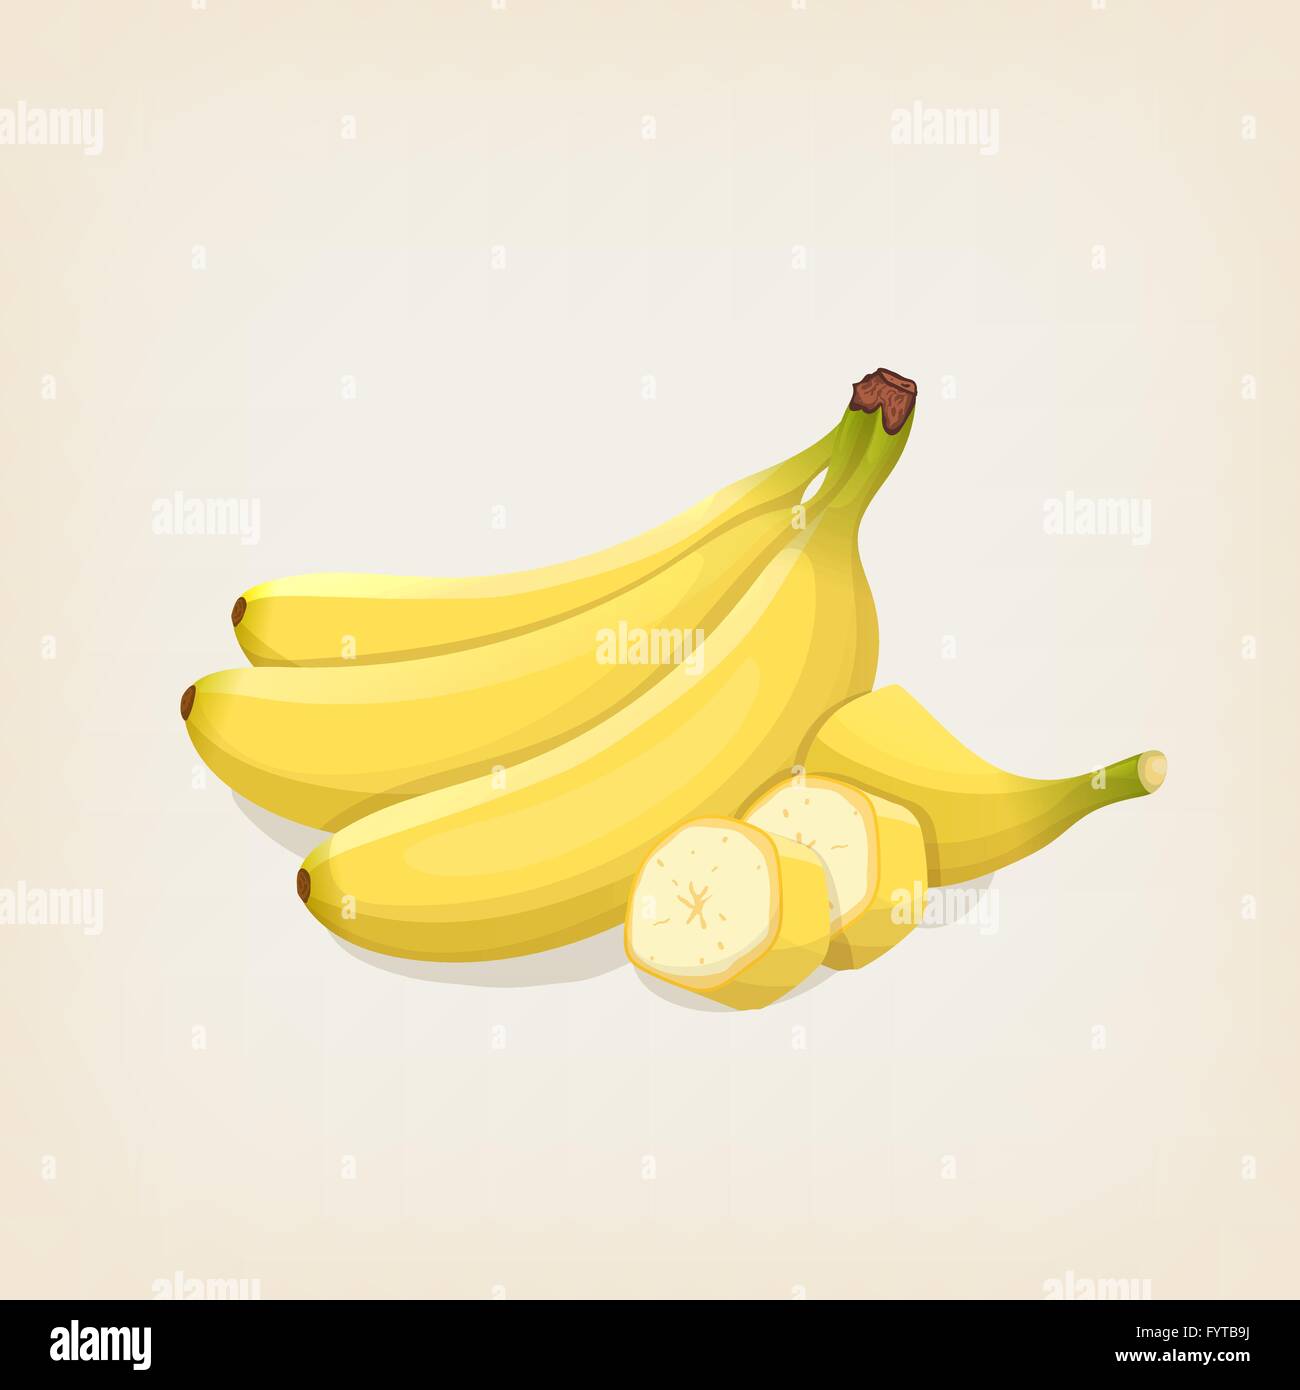 https://c8.alamy.com/comp/FYTB9J/vector-bananas-bunches-of-fresh-banana-and-sliced-banana-vector-illustration-FYTB9J.jpg